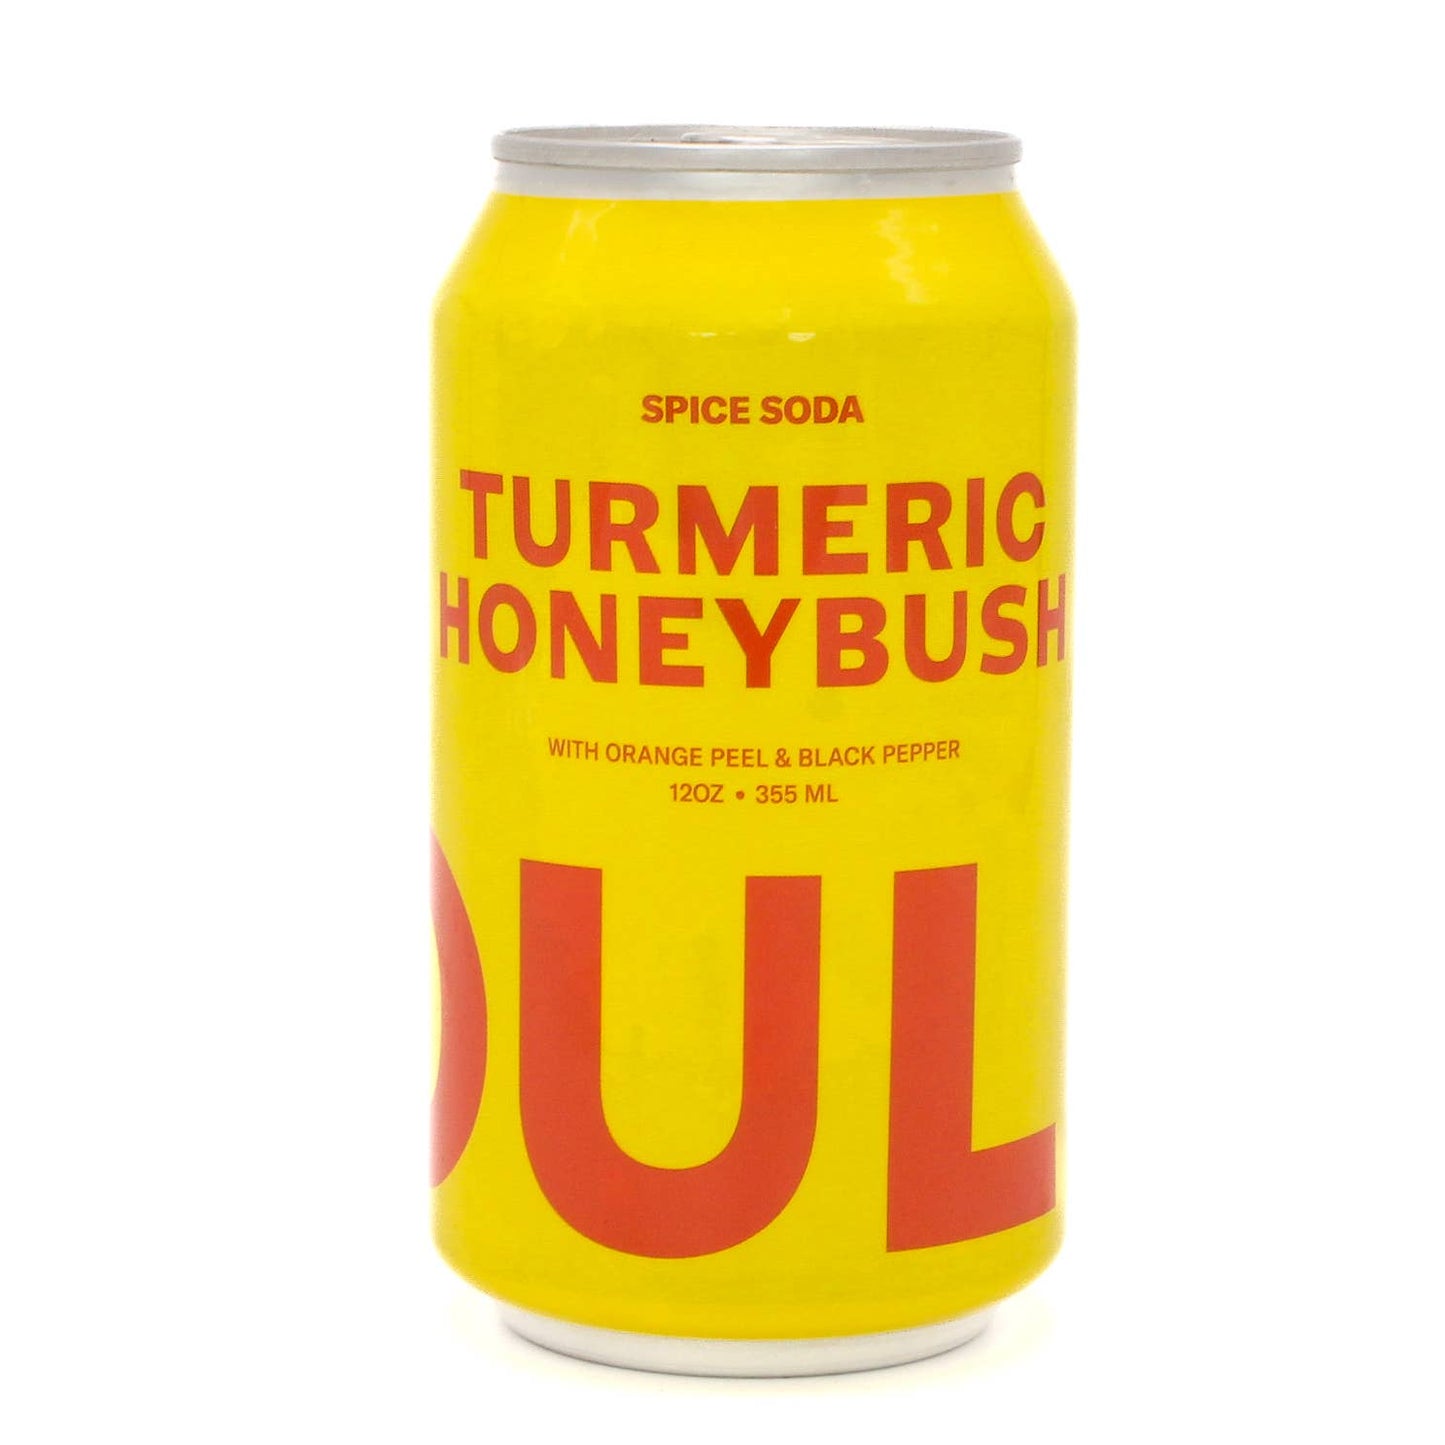 Turmeric Honeybush Spice Soda